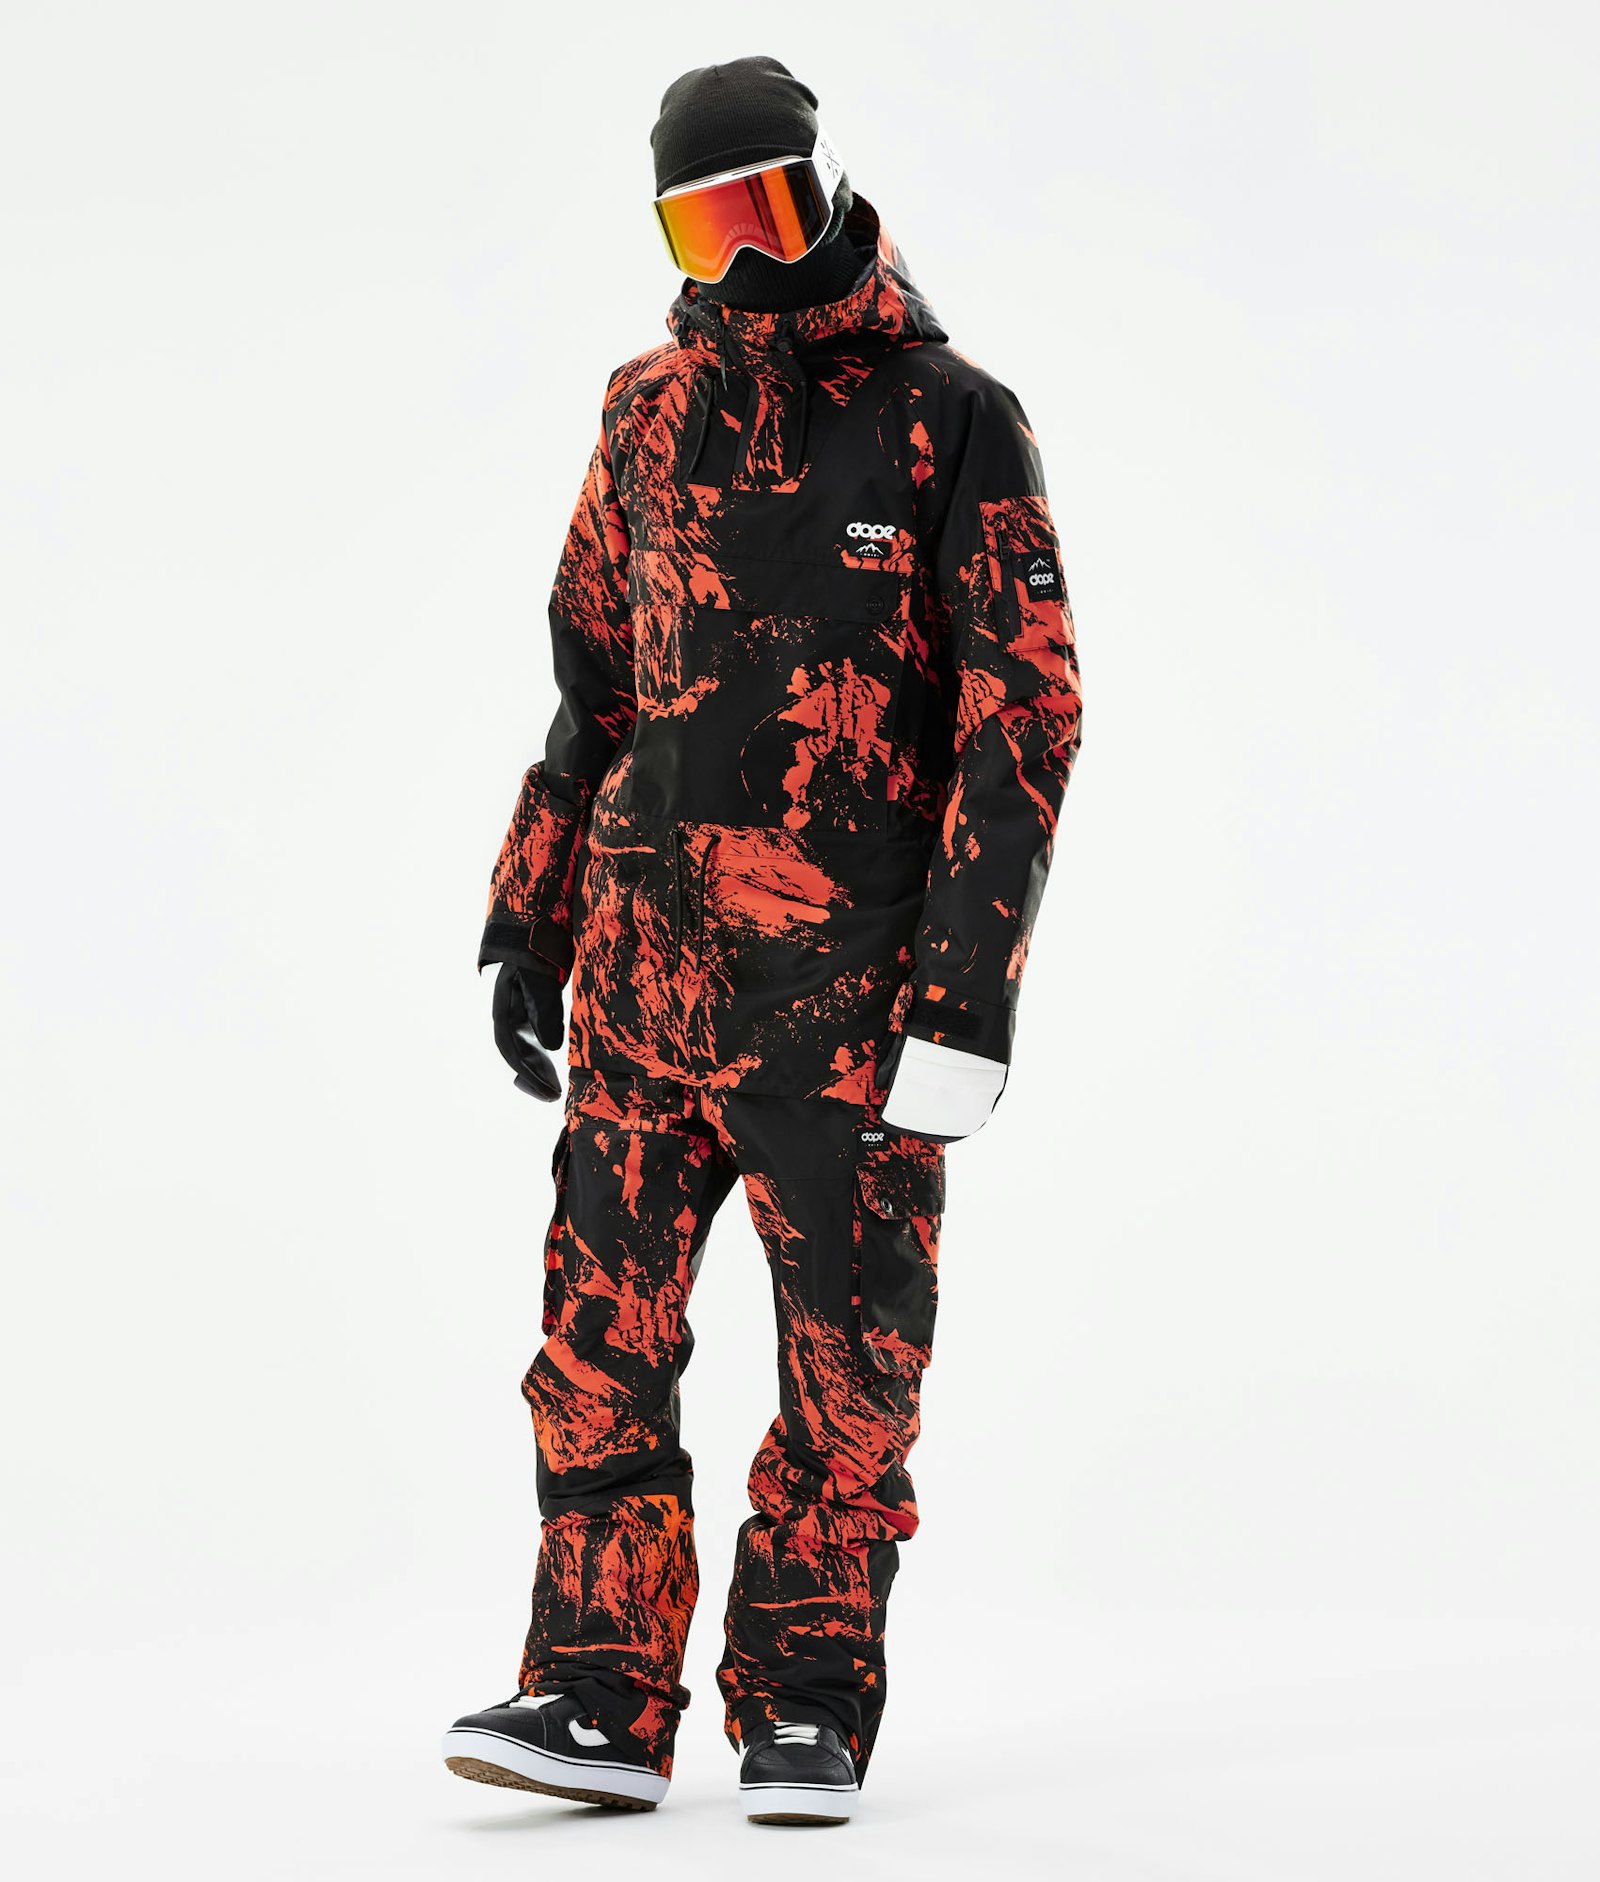 Dope Annok 2021 Veste Snowboard Homme Paint Orange